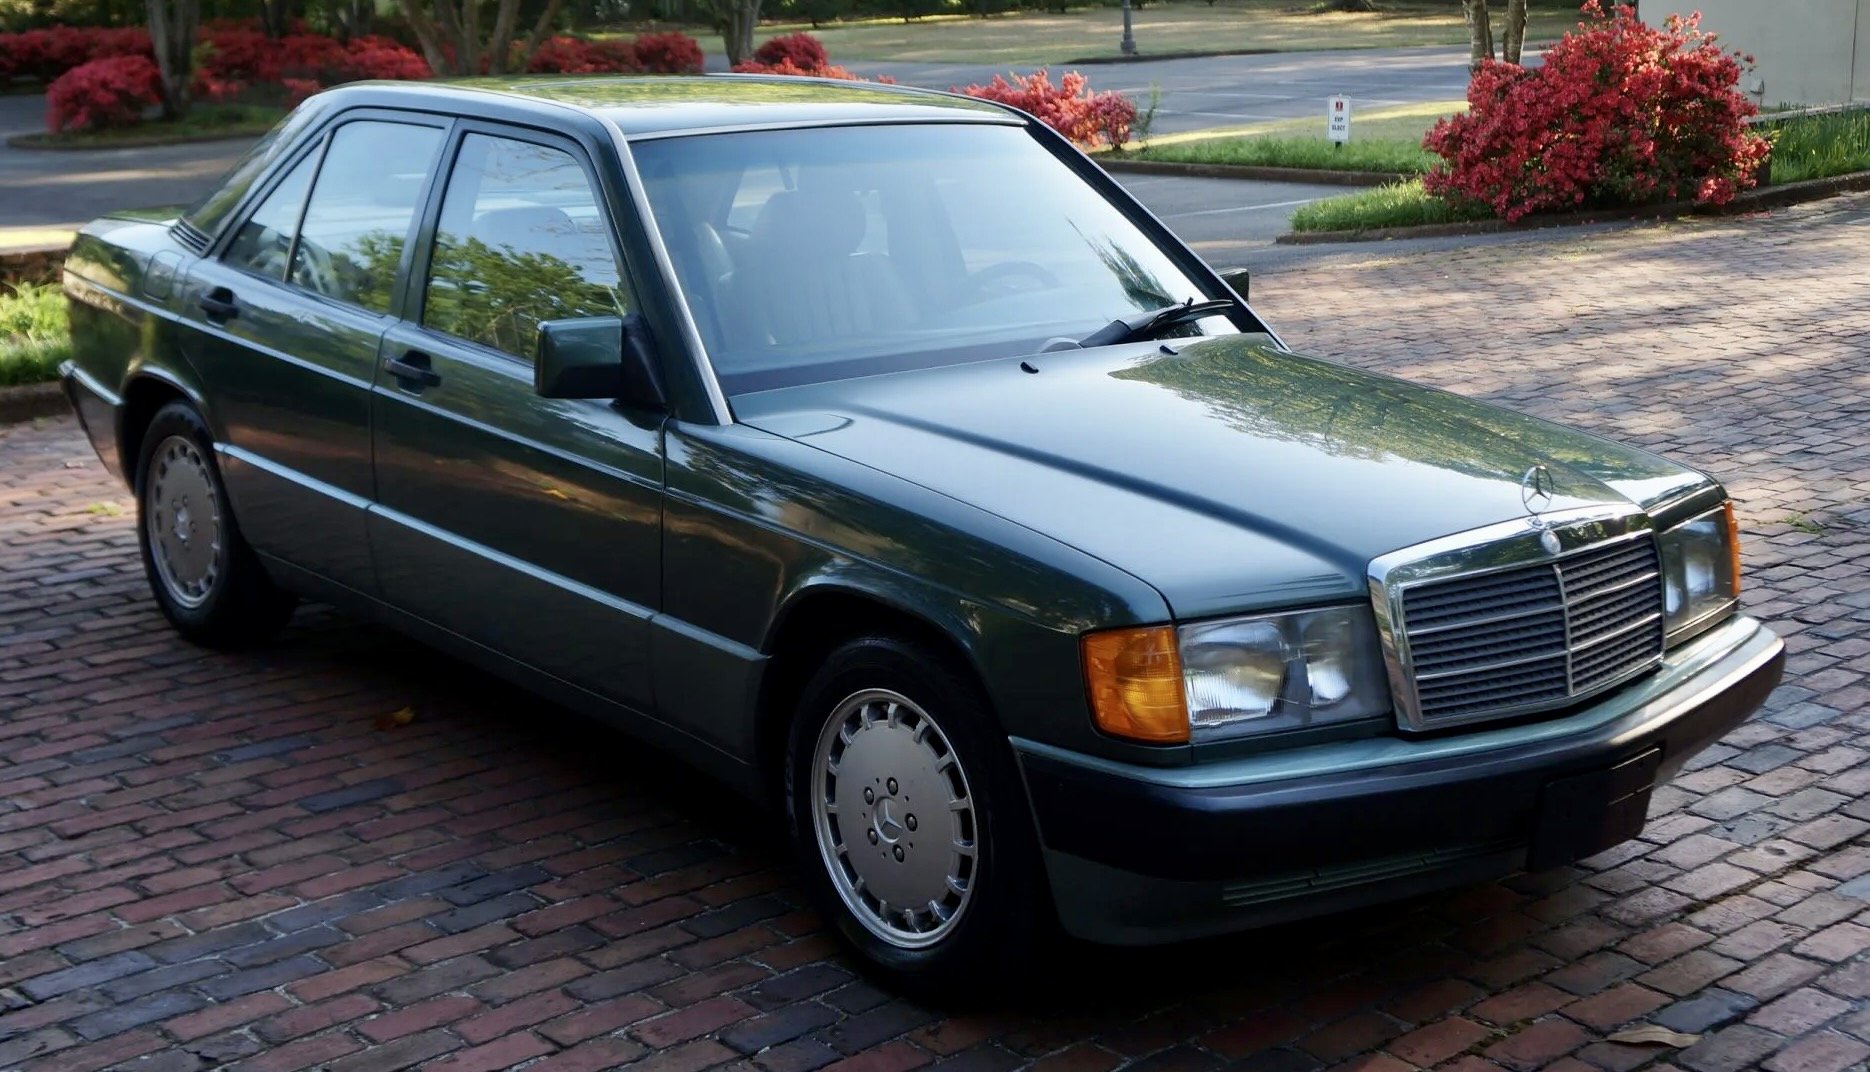 1993 Mercedes-Benz W201 190E; cars under ₦500,000.